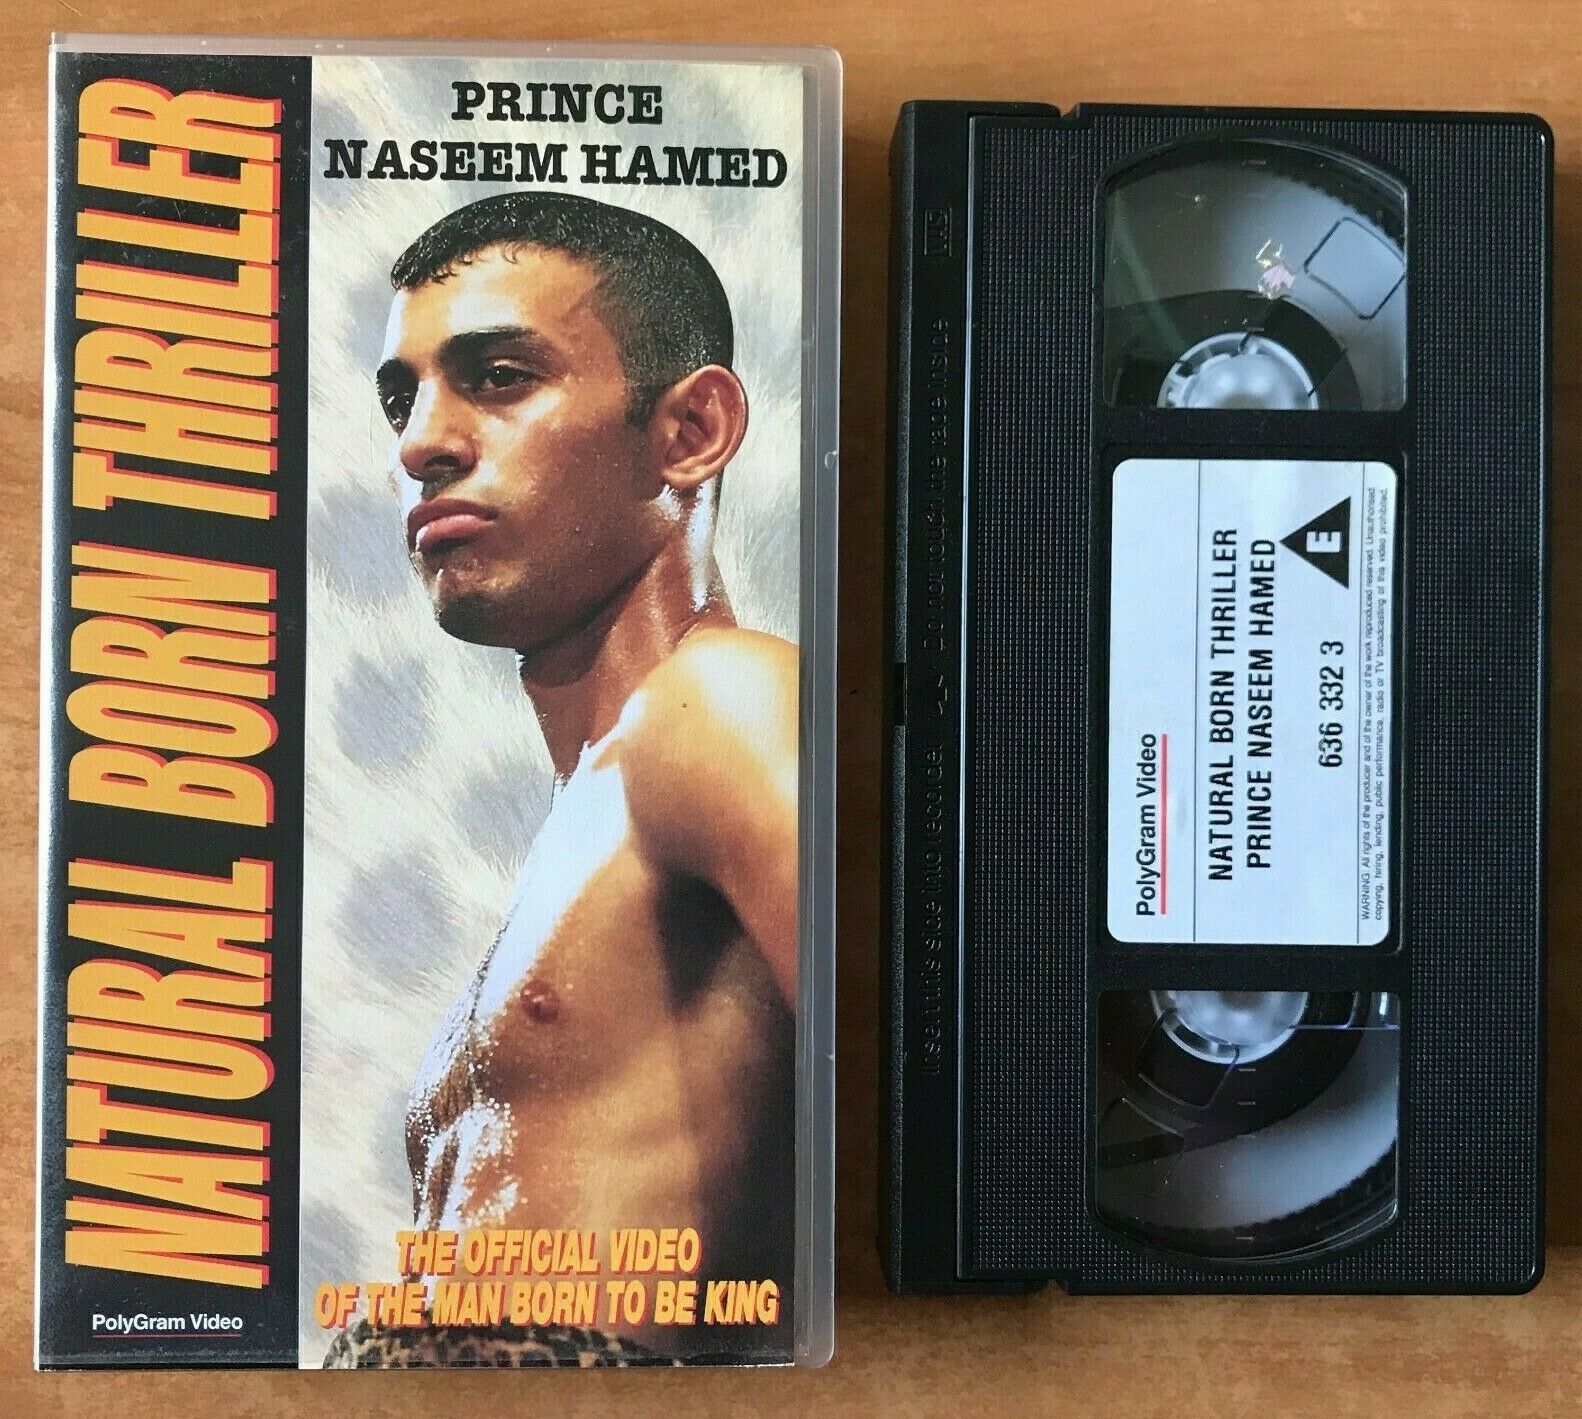 Natural Born Thriller: Prince Naseem Hamed [Documentary] - Boxing - Sports - VHS-